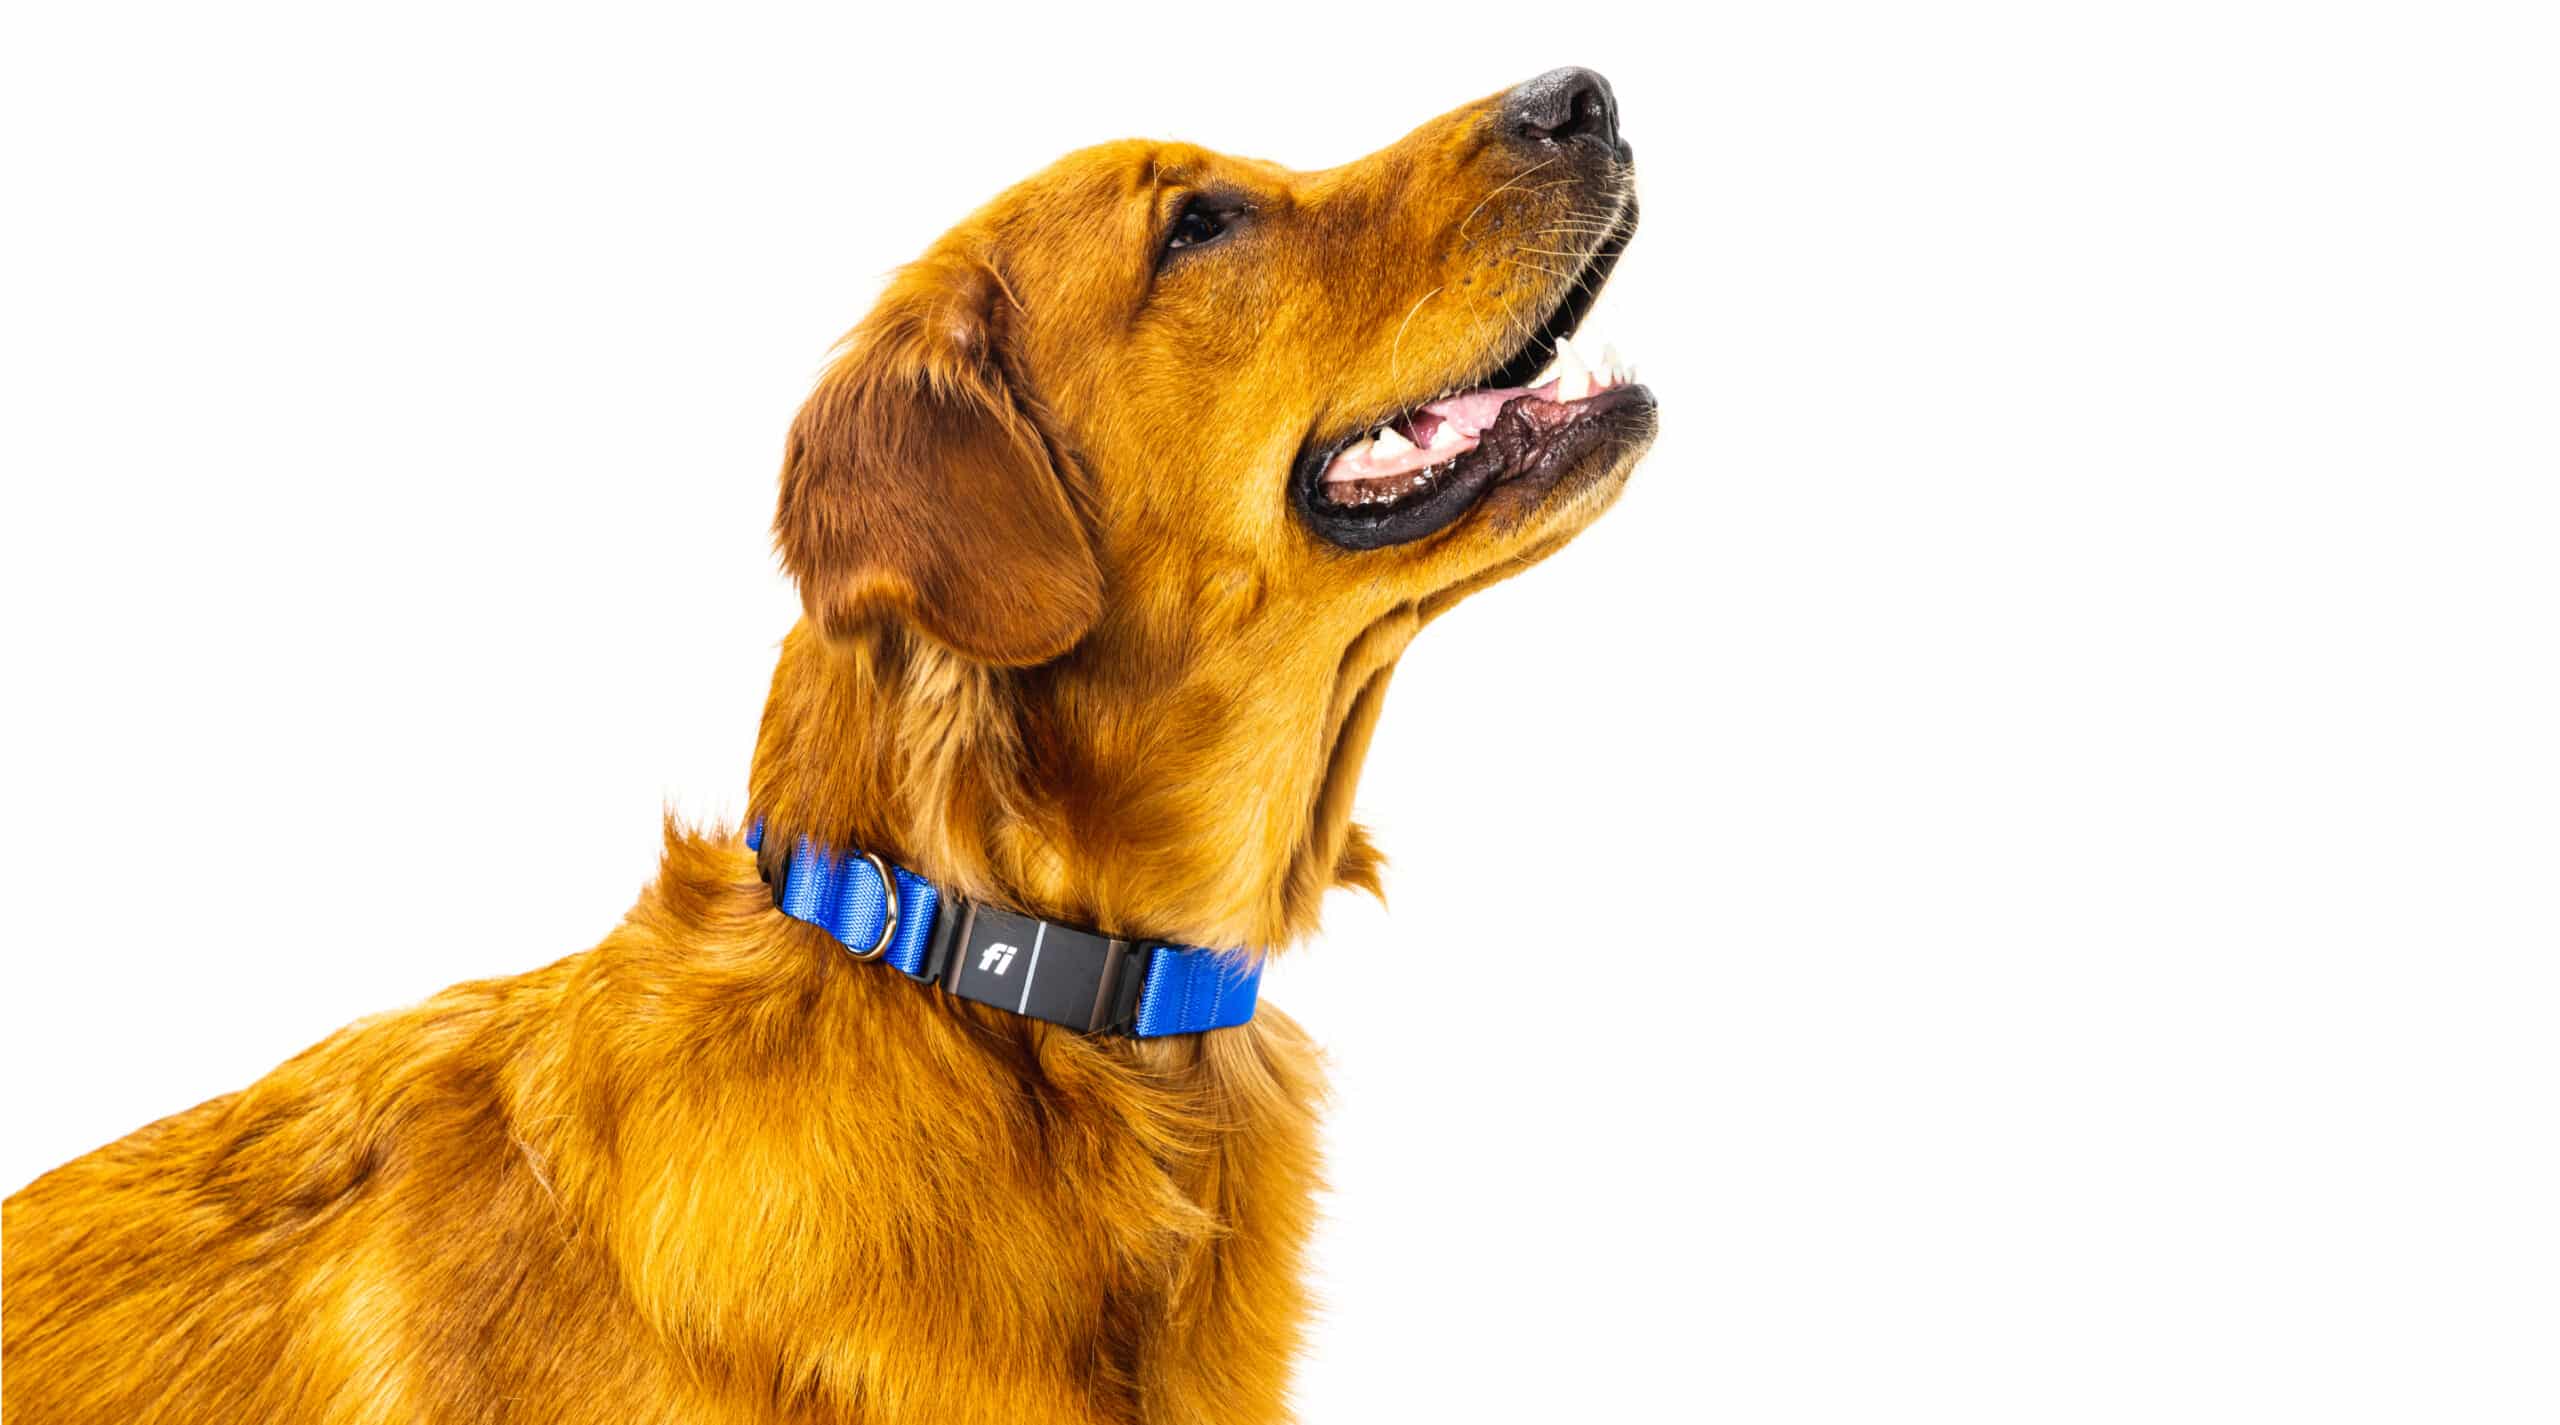 Fi Smart Dog Collar Series 3